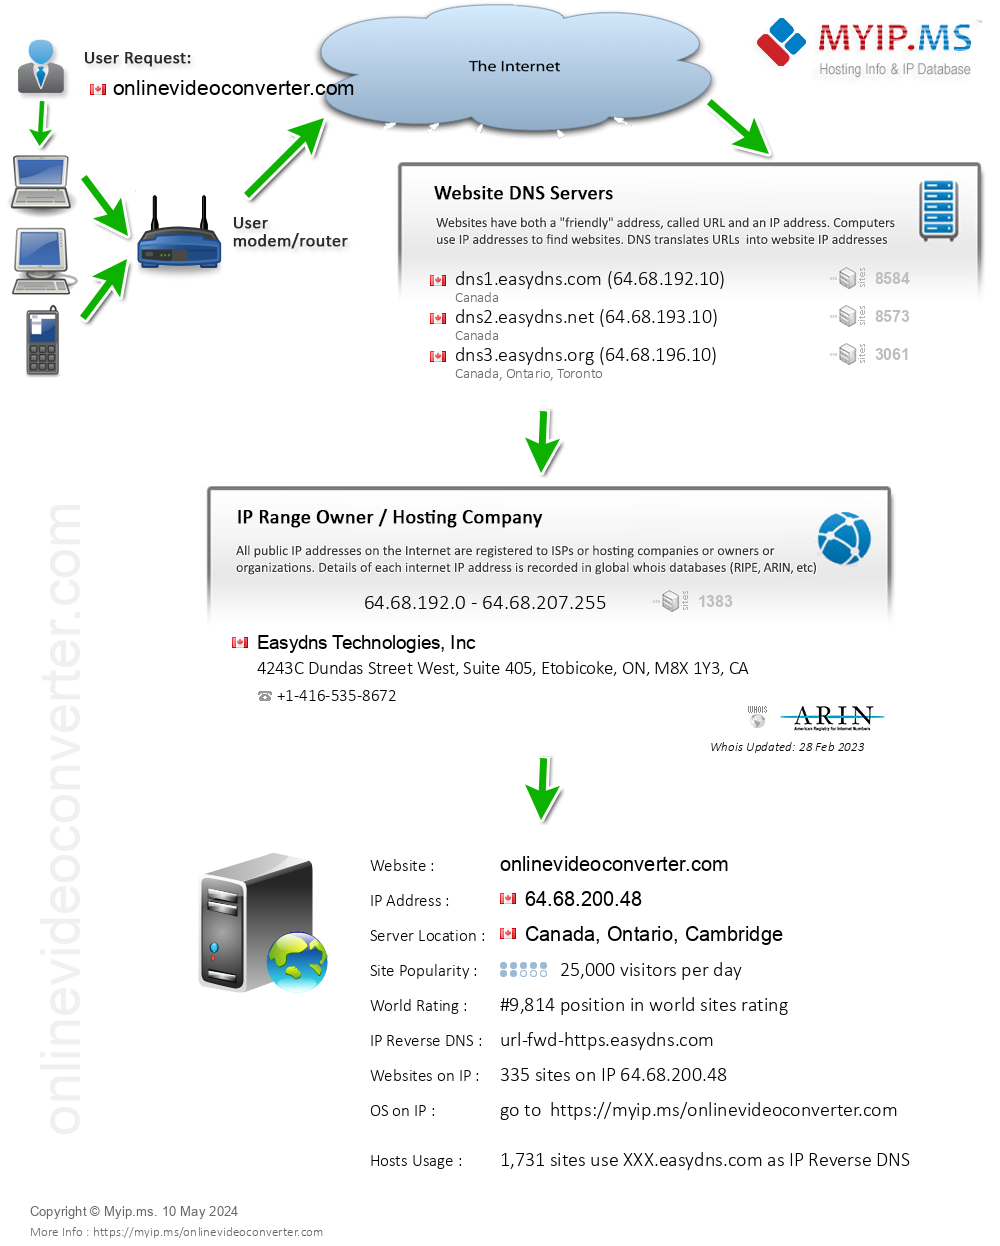 Onlinevideoconverter.com - Website Hosting Visual IP Diagram